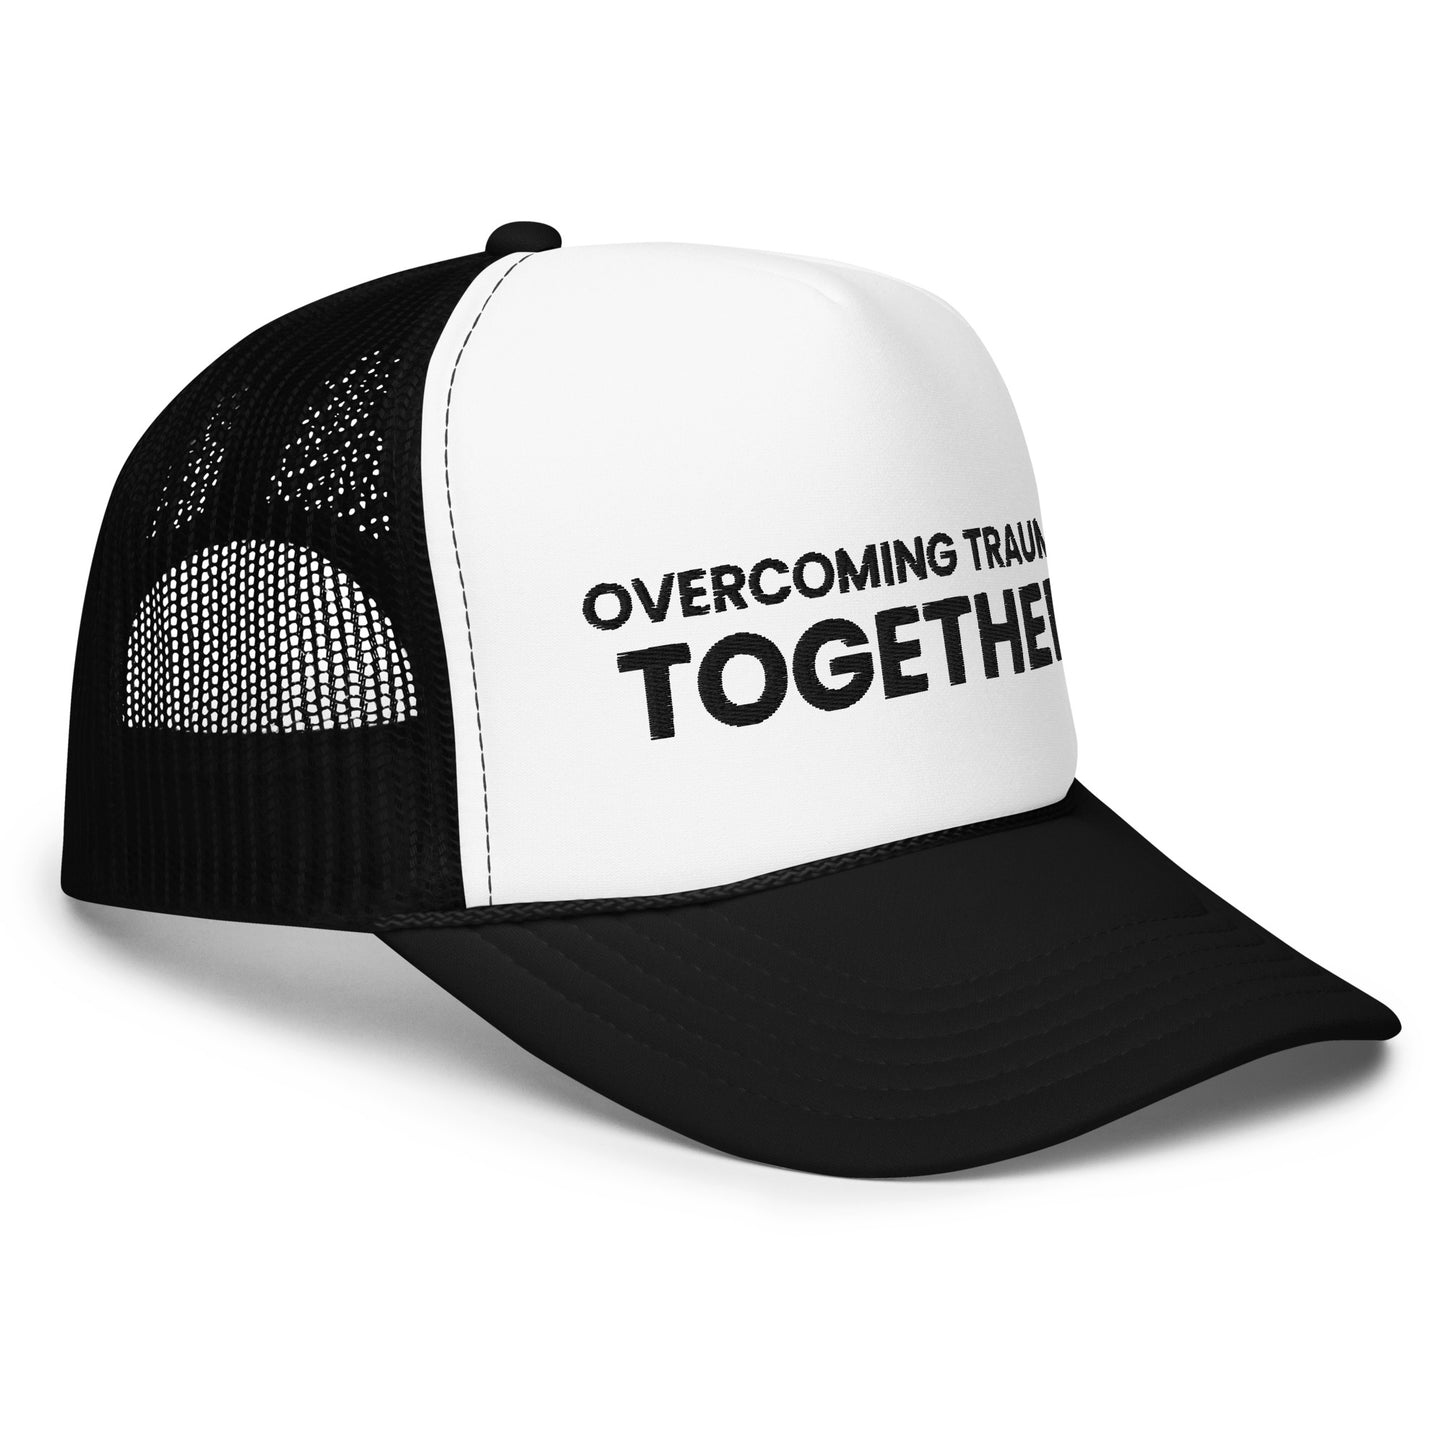 Overcoming Trauma Together Foam trucker hat